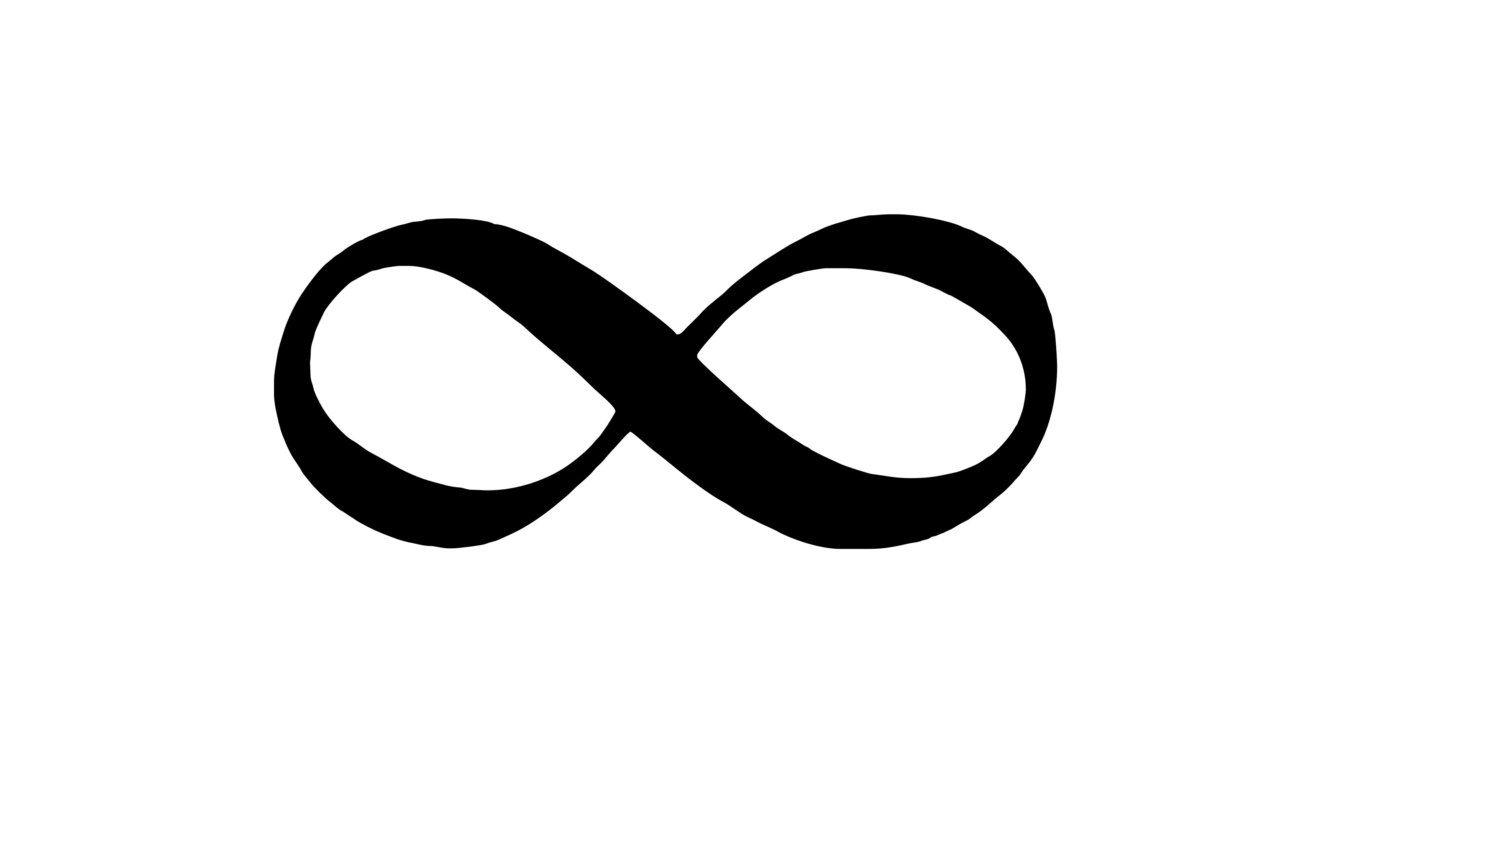 Infinity Logo - Free Infinity Symbol, Download Free Clip Art, Free Clip Art